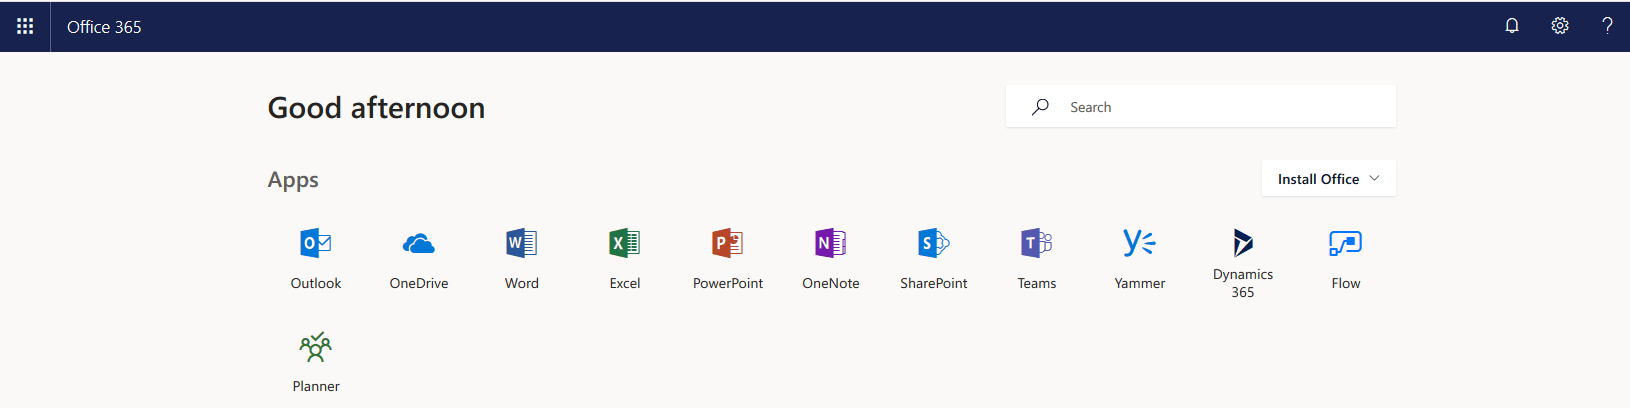 Office 365 Portal Application list